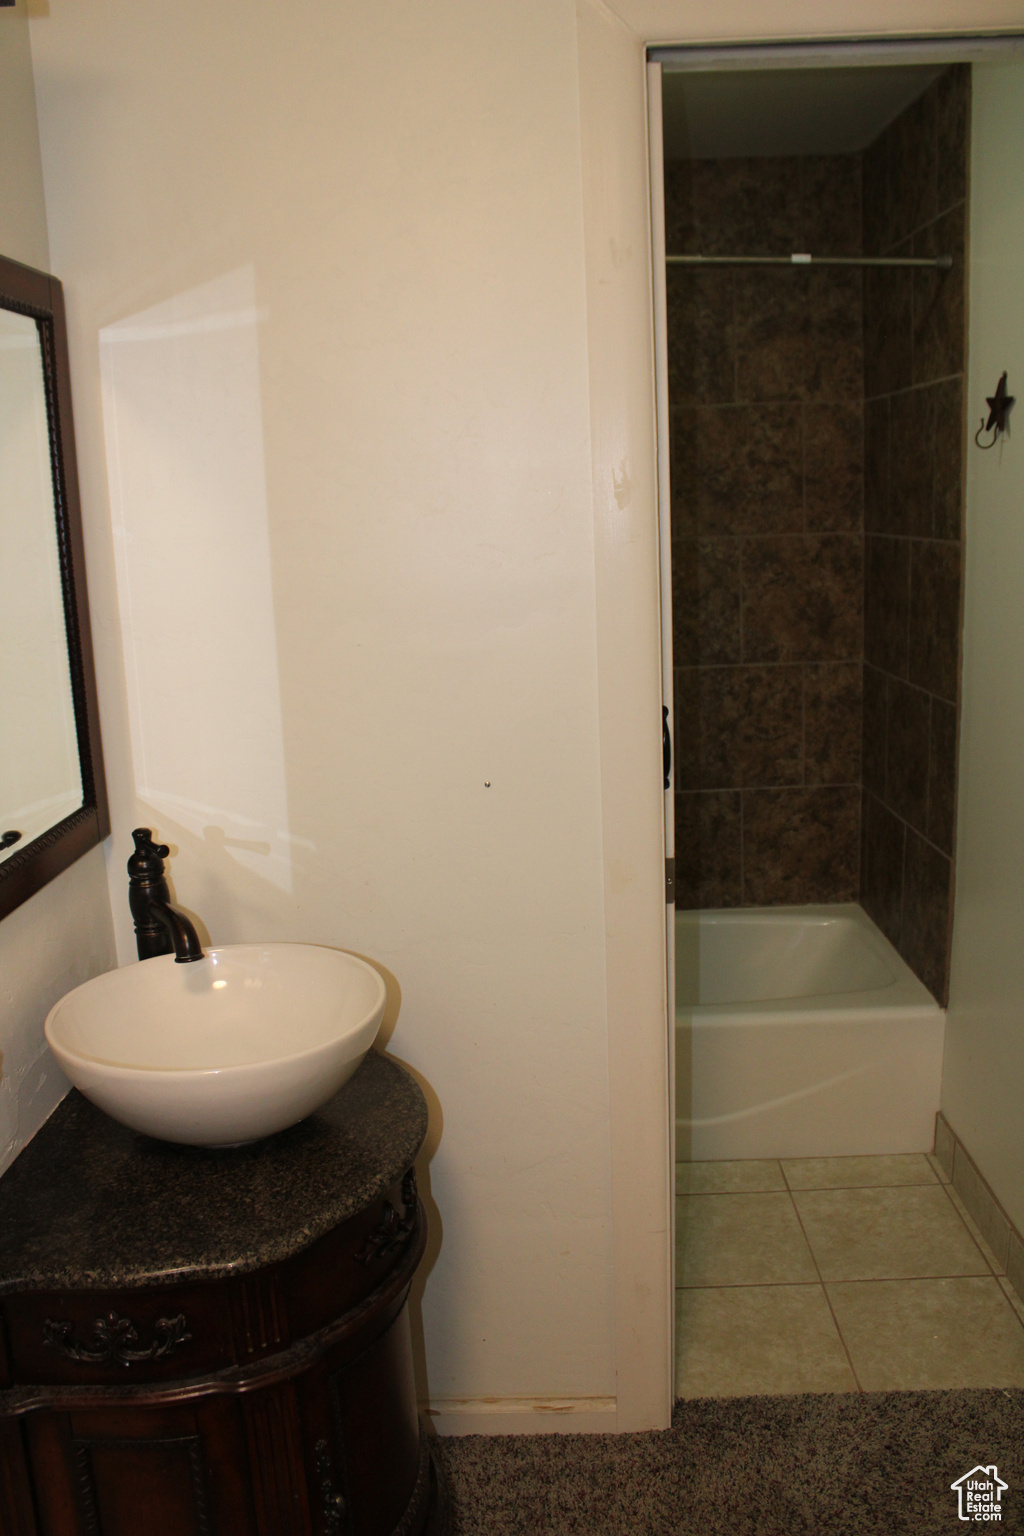 Bathroom with vanity, tiled shower / bath, and tile flooring